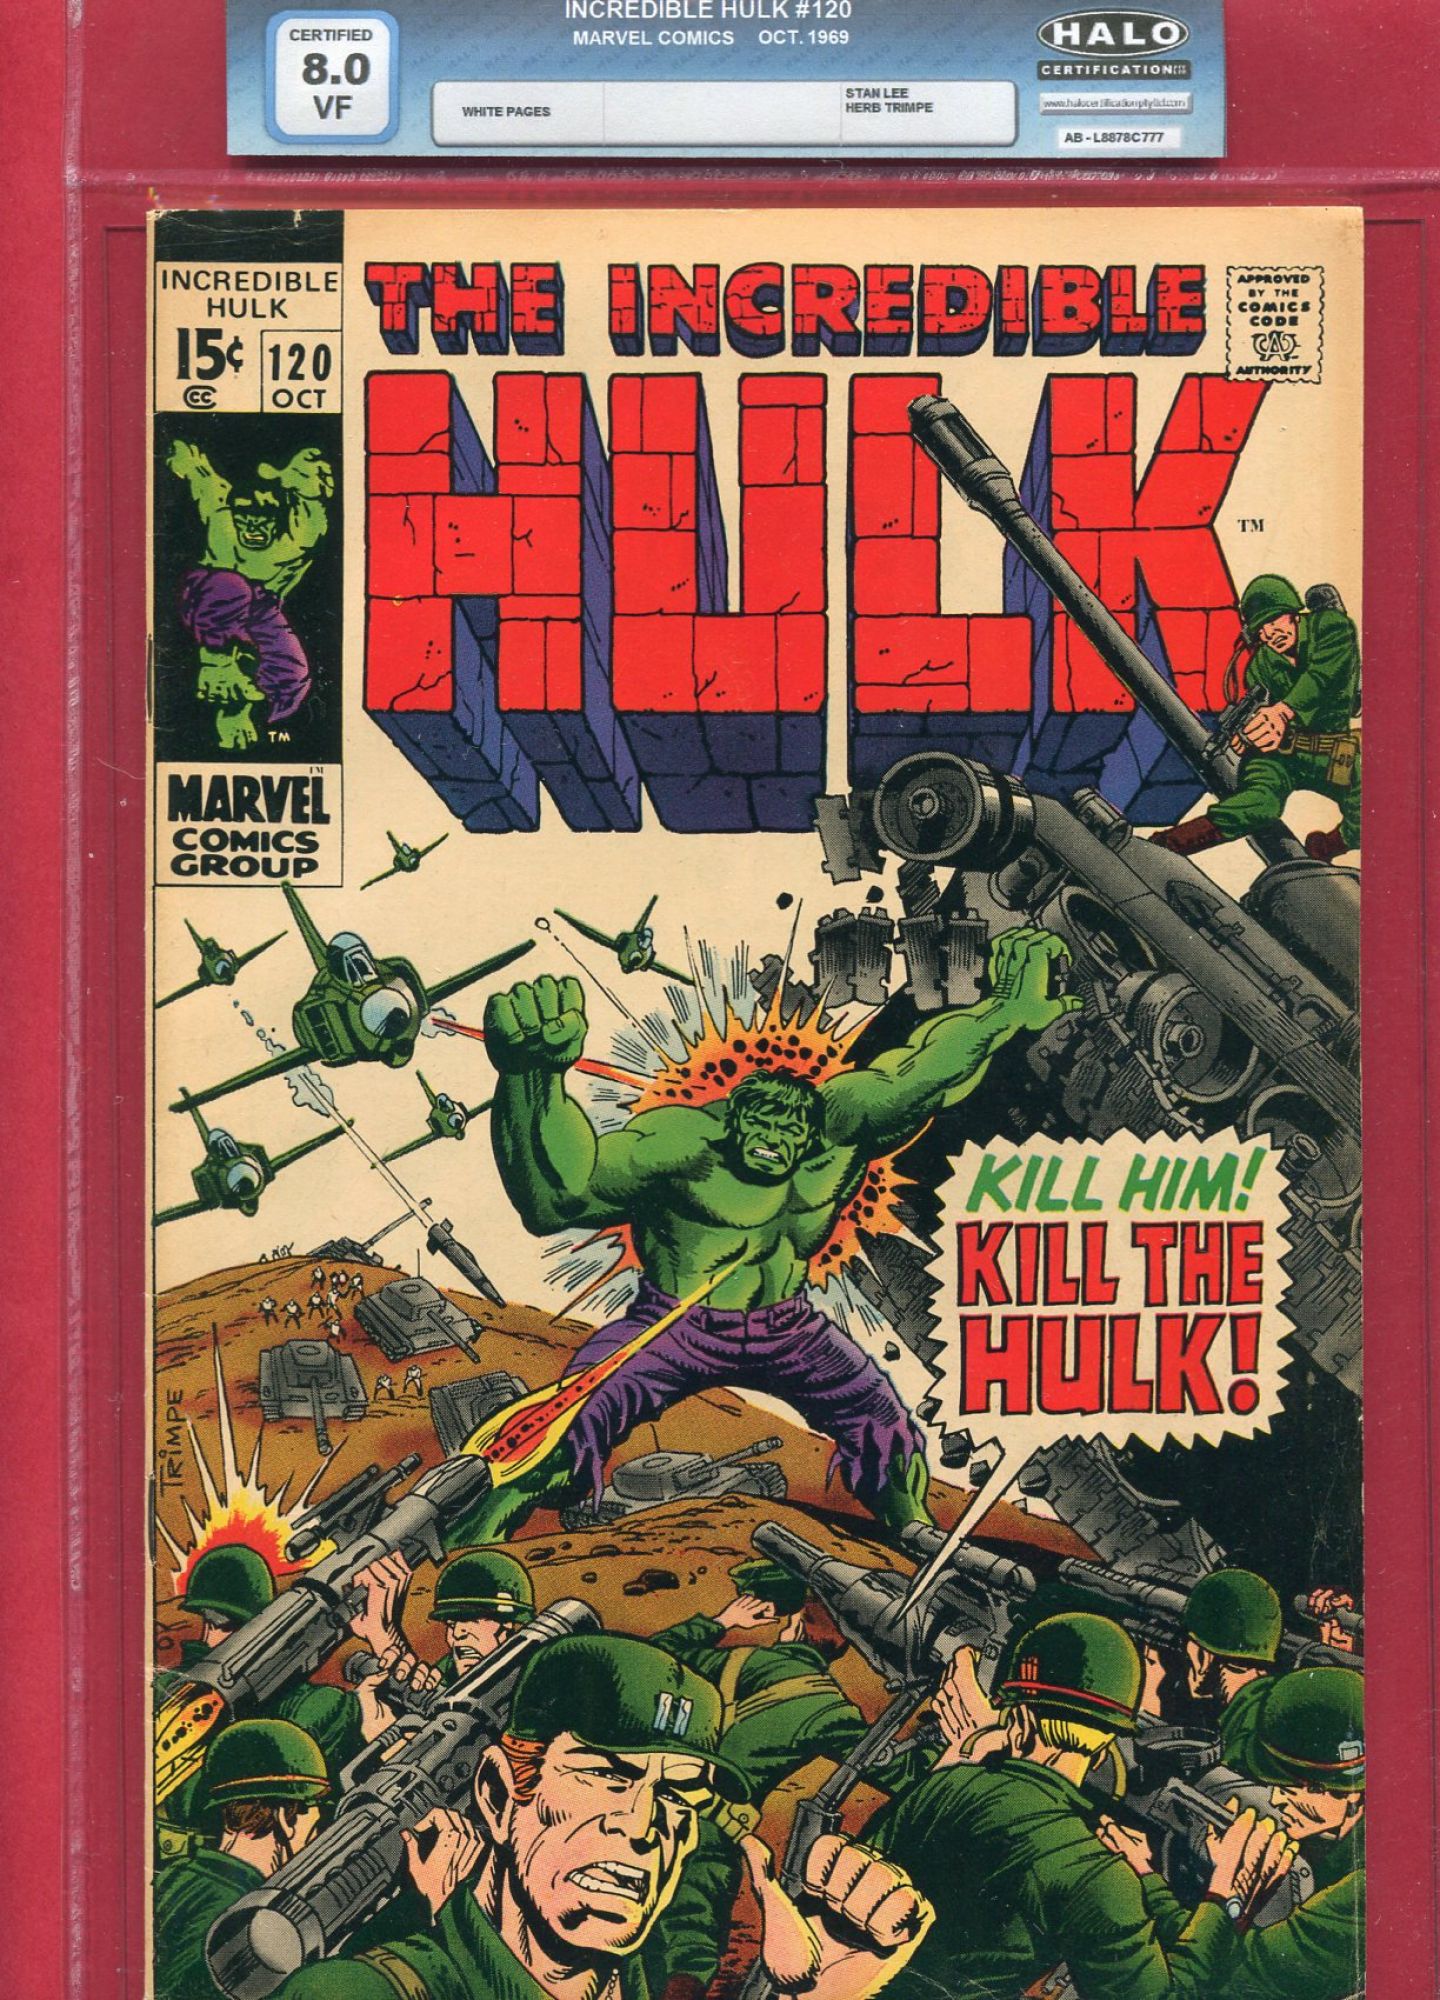 Incredible Hulk #120, Oct 1969, 8.0 VF Halo Soft Slab